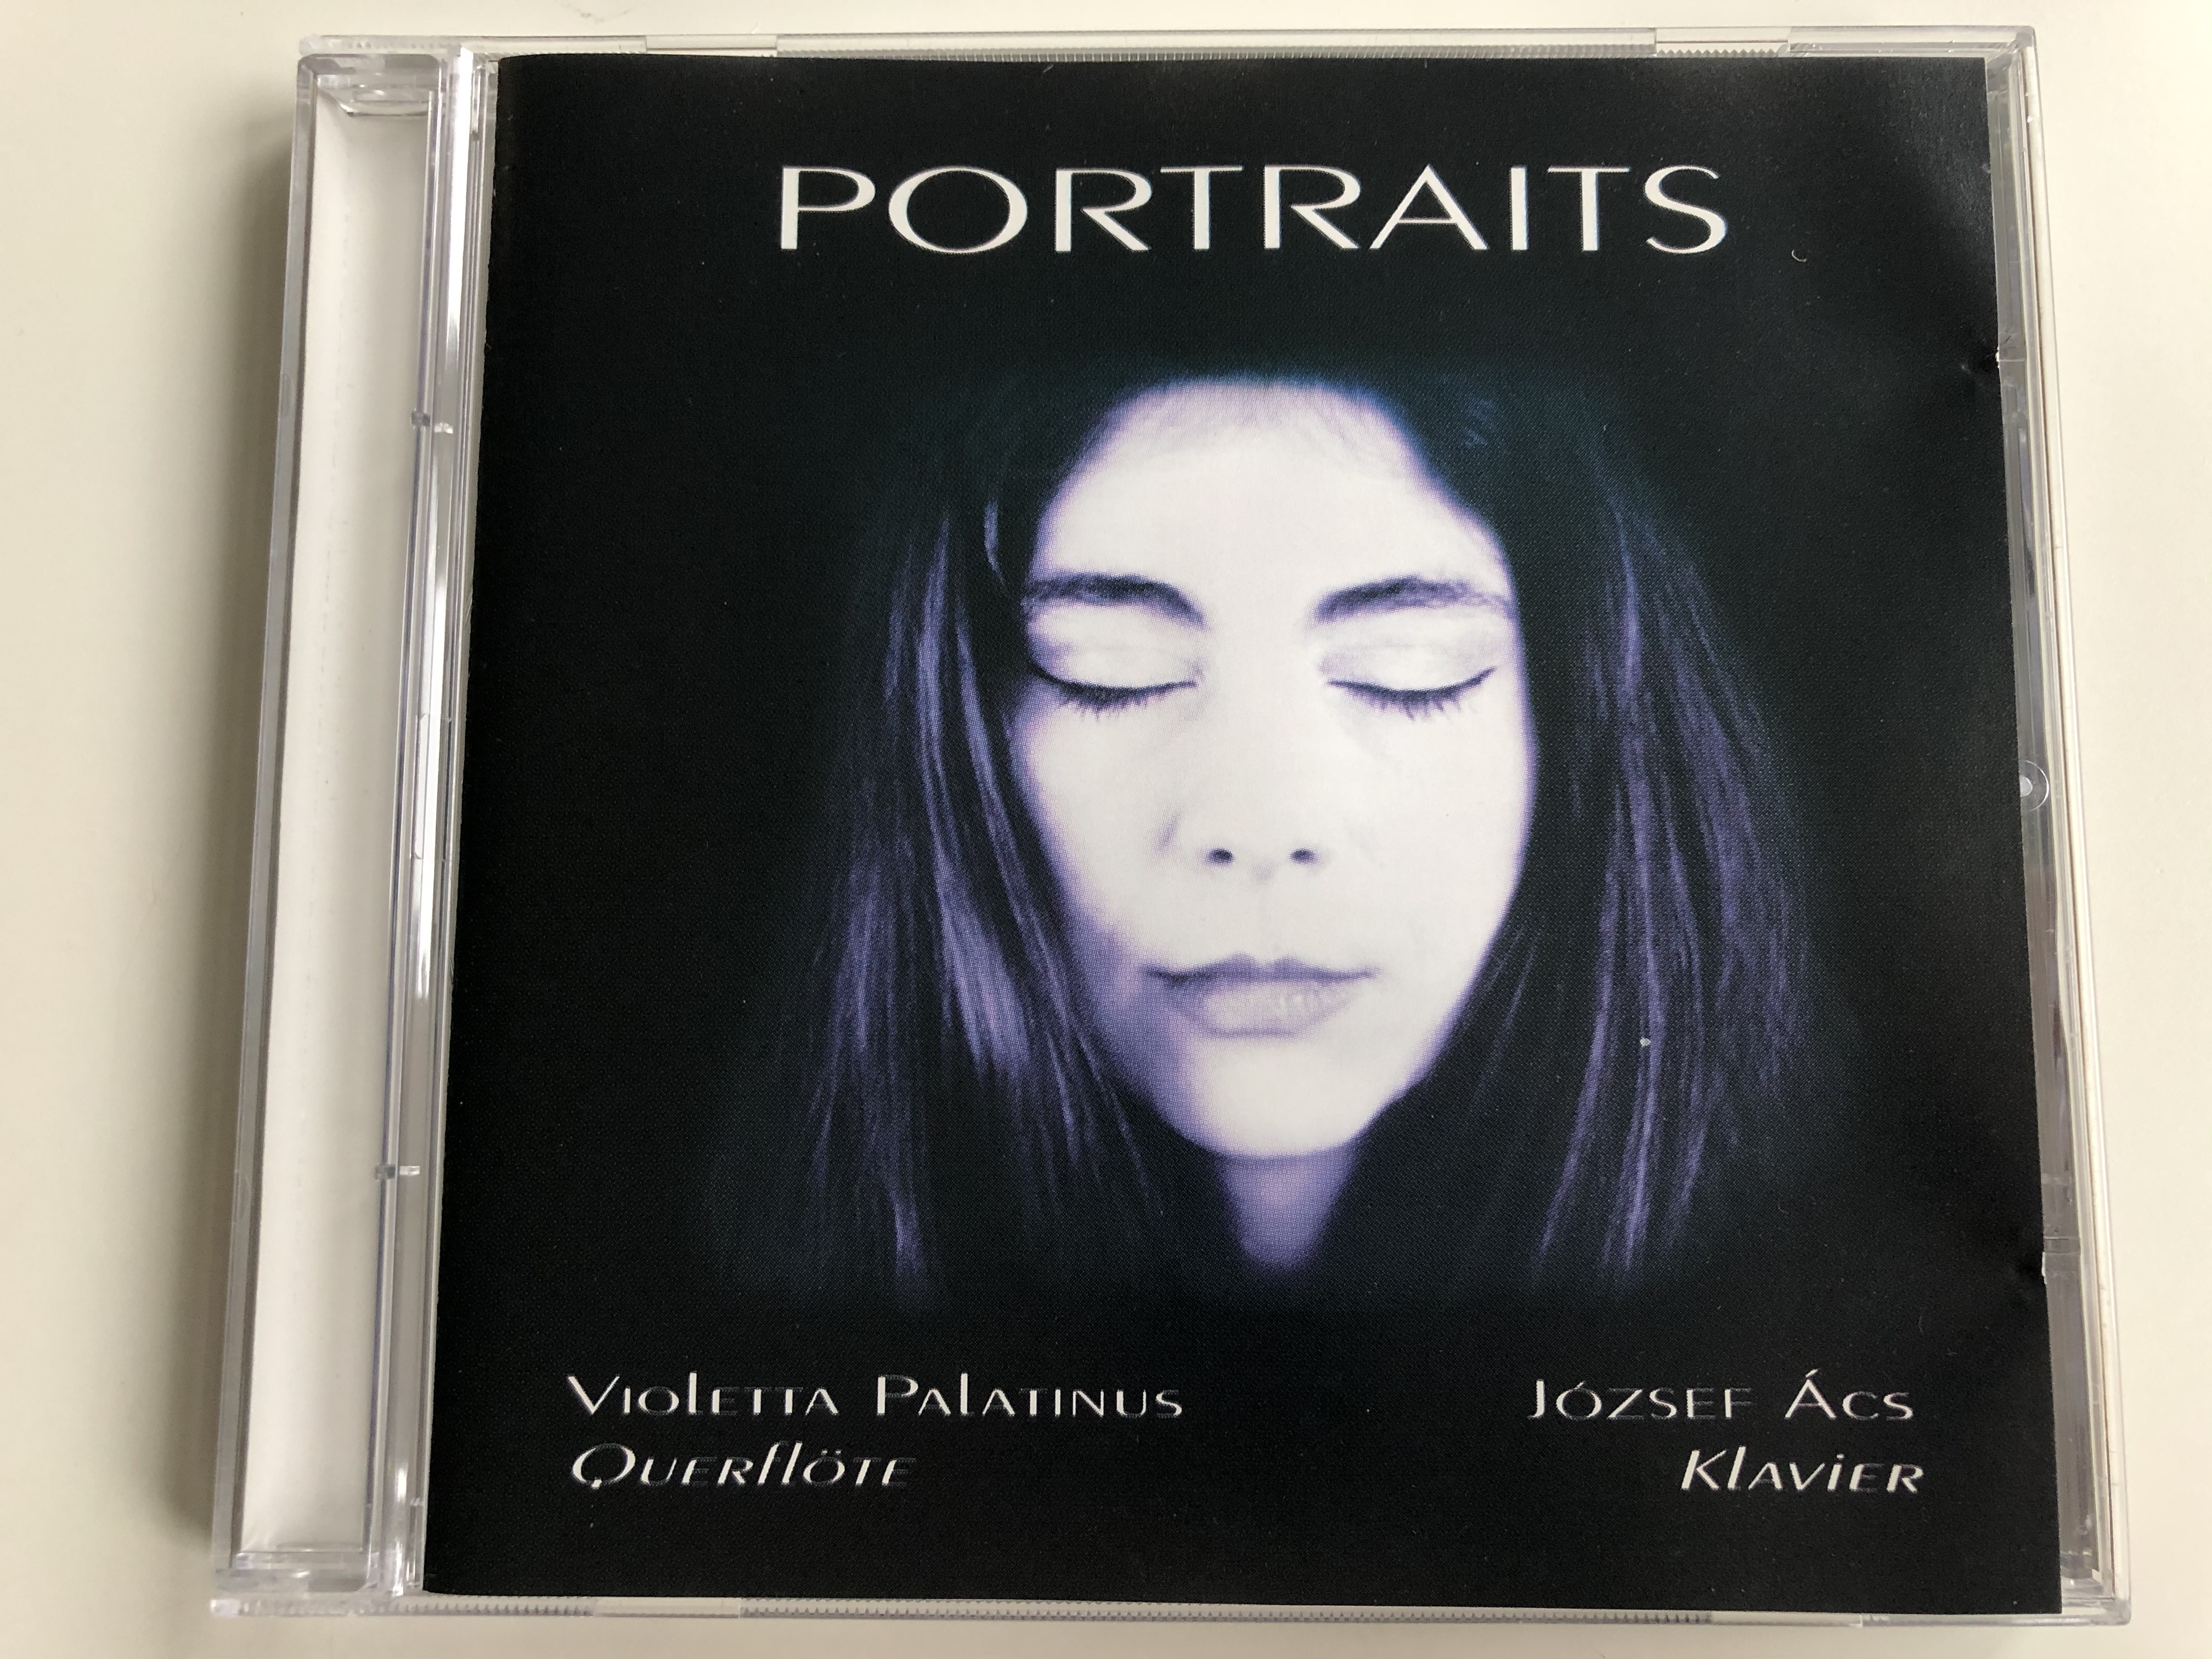 portraits-violetta-palatinus-quertflote-jozsef-acs-klavier-audio-cd-2002-1-.jpg